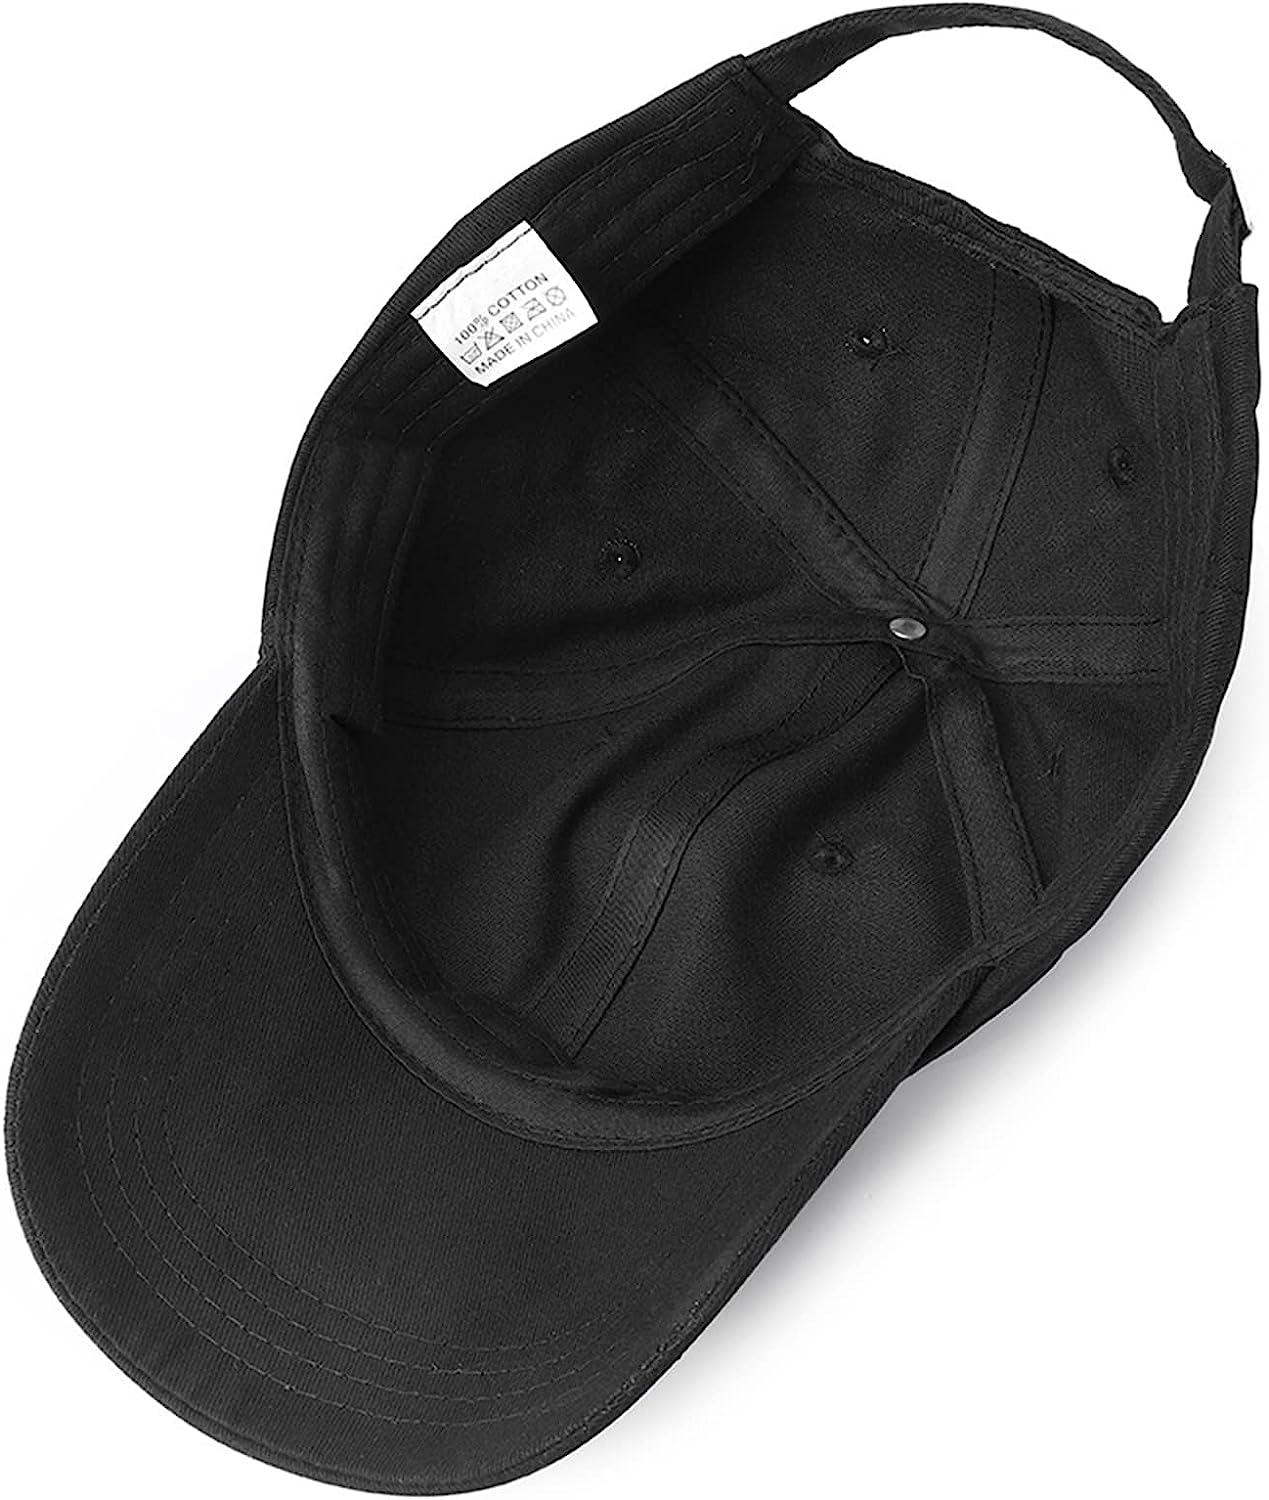 NPQQUAN Men Women Baseball Cap Golf Dad Hat Adjustable Original Classic Low  Profile Cotton Hat Unconstructed Plain Cap Black 1